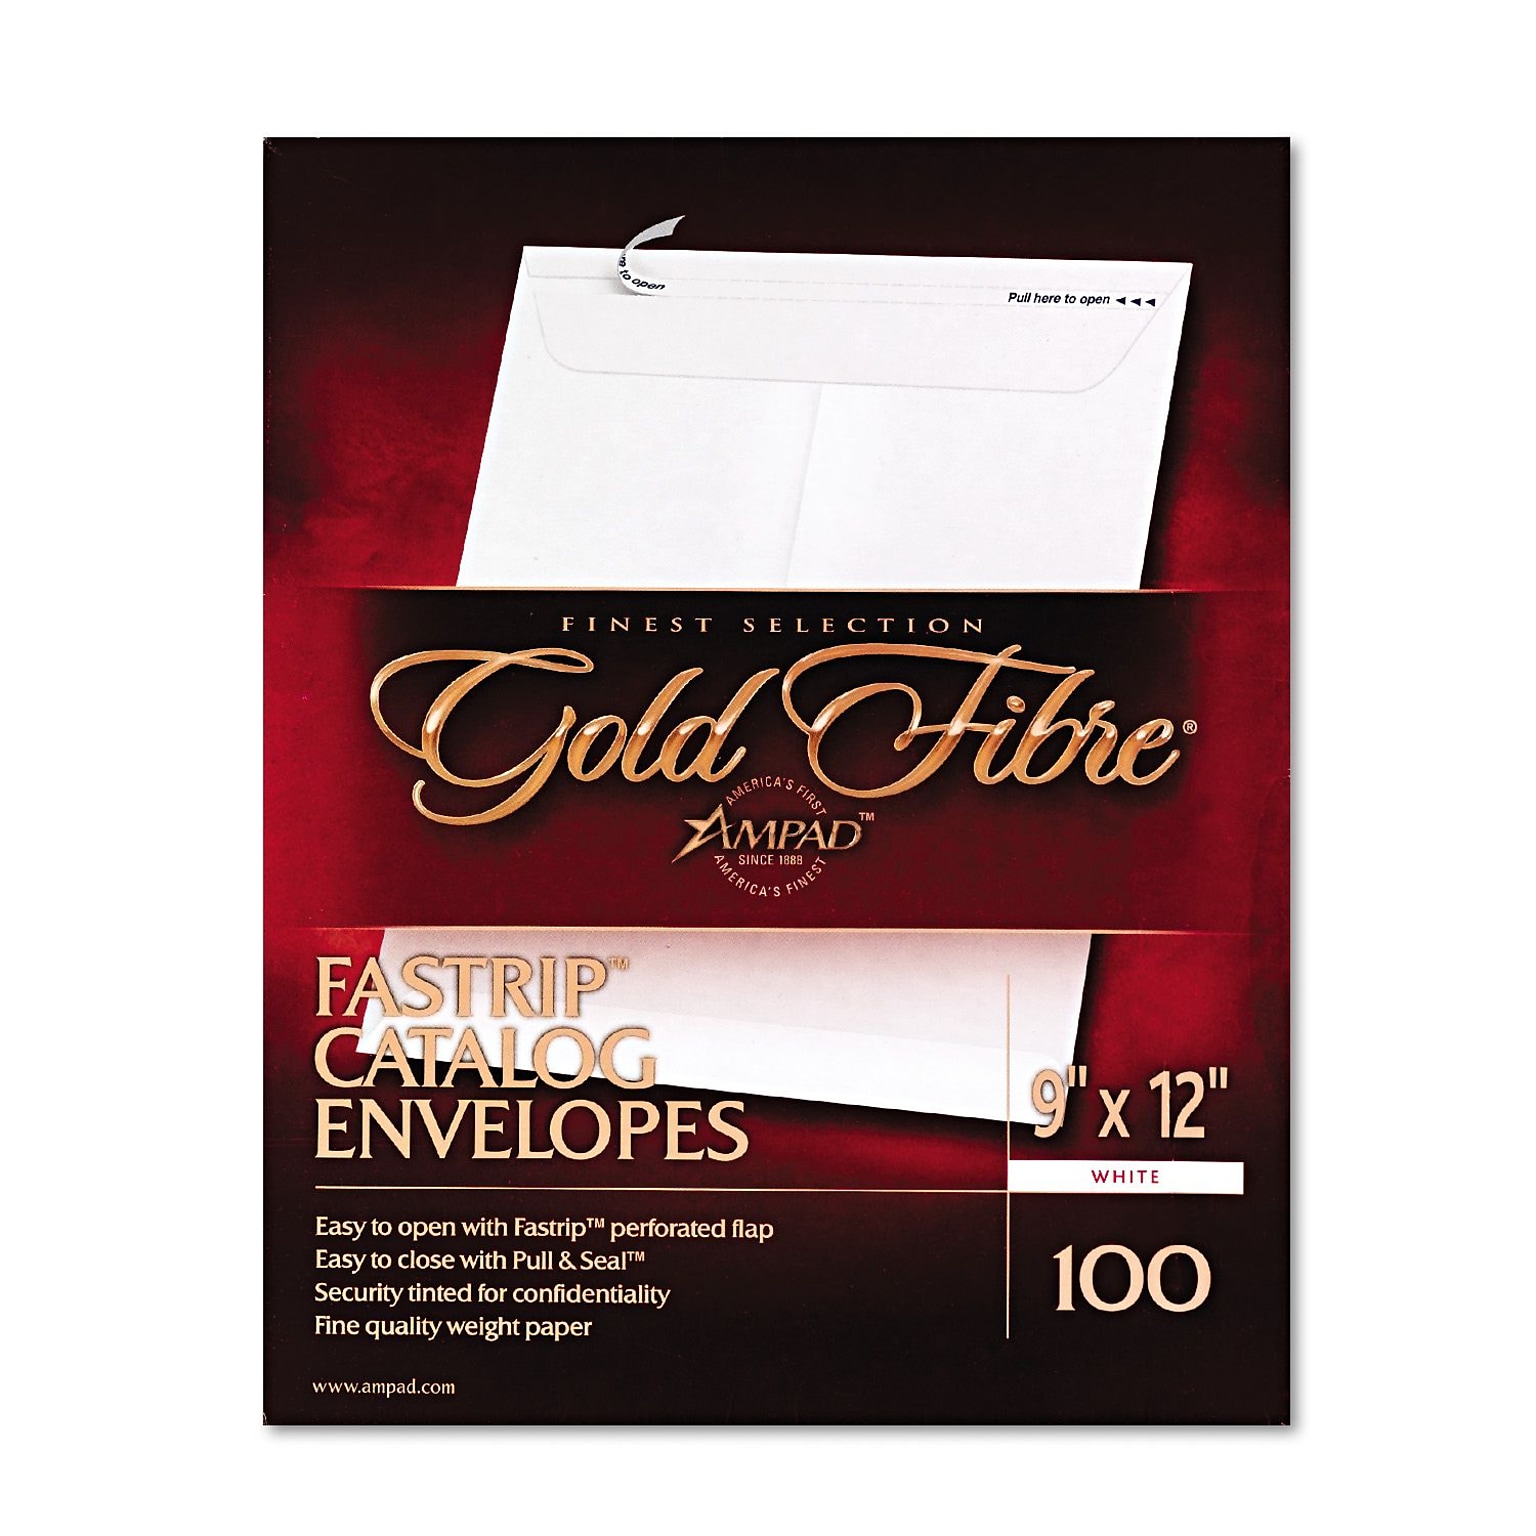 Ampad Gold Fibre Fastrip™ Release & Seal White Catalog Envelope, White, 9 x 12, 100/Box (73127)